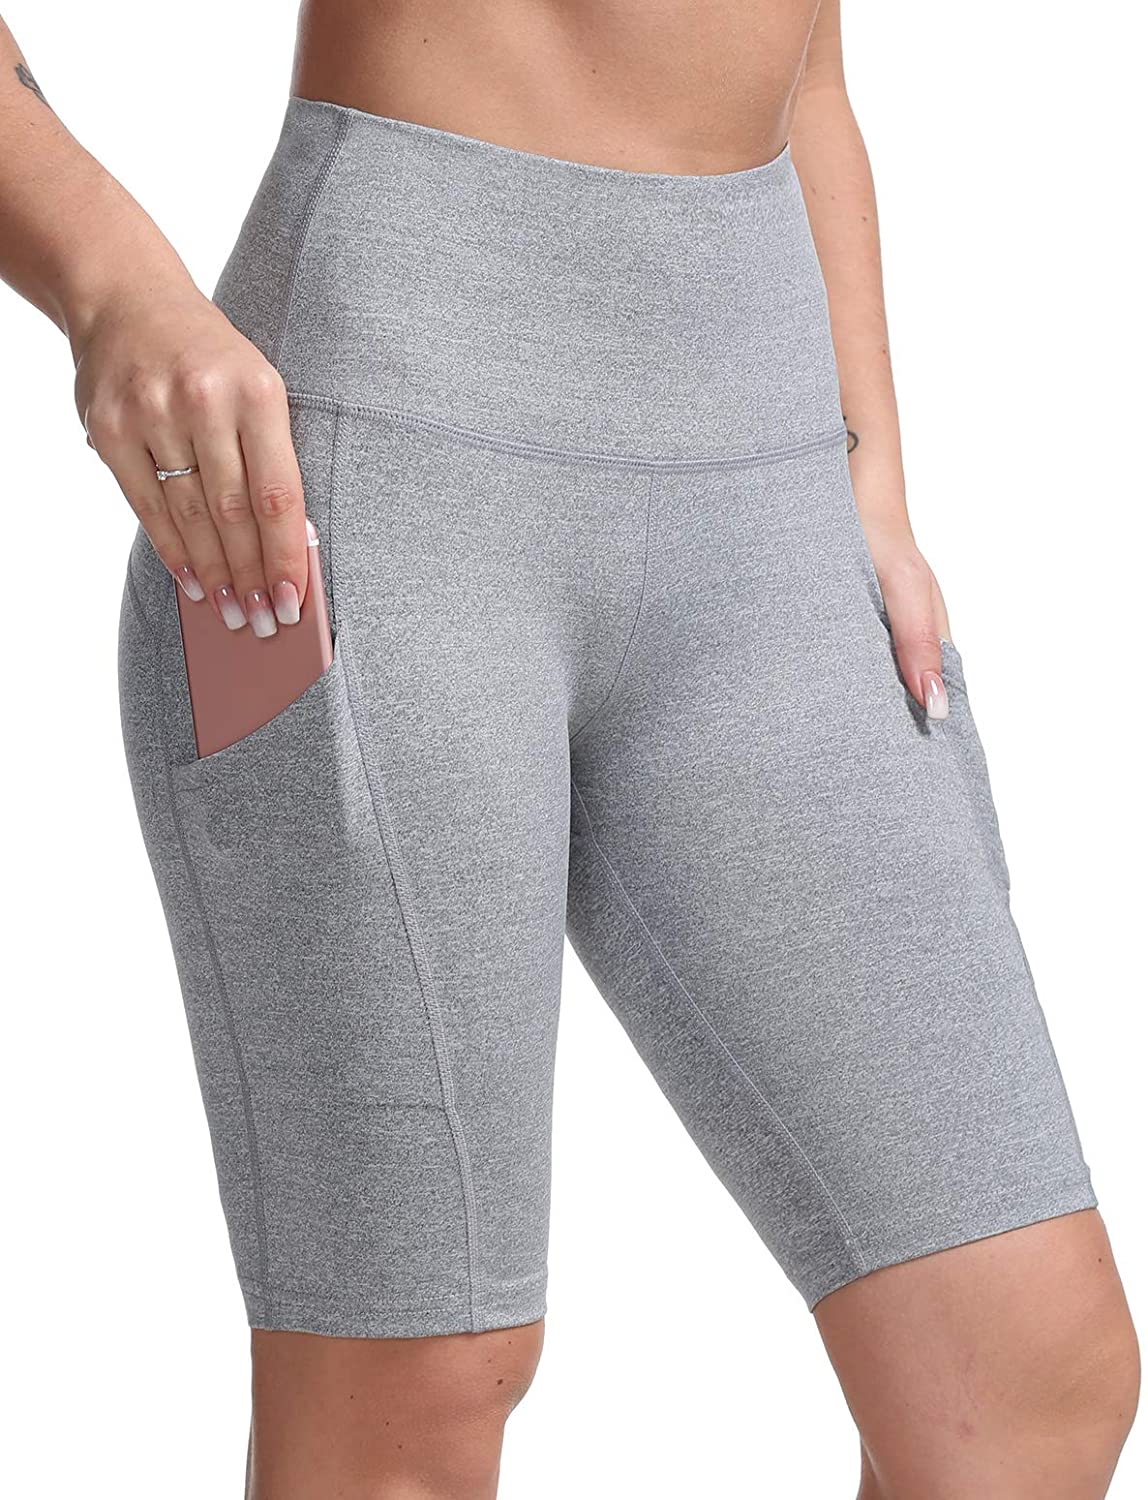 DILANNI Biker Shorts for Women High Waist Workout Yoga Shorts with Side Pockets 8'' 